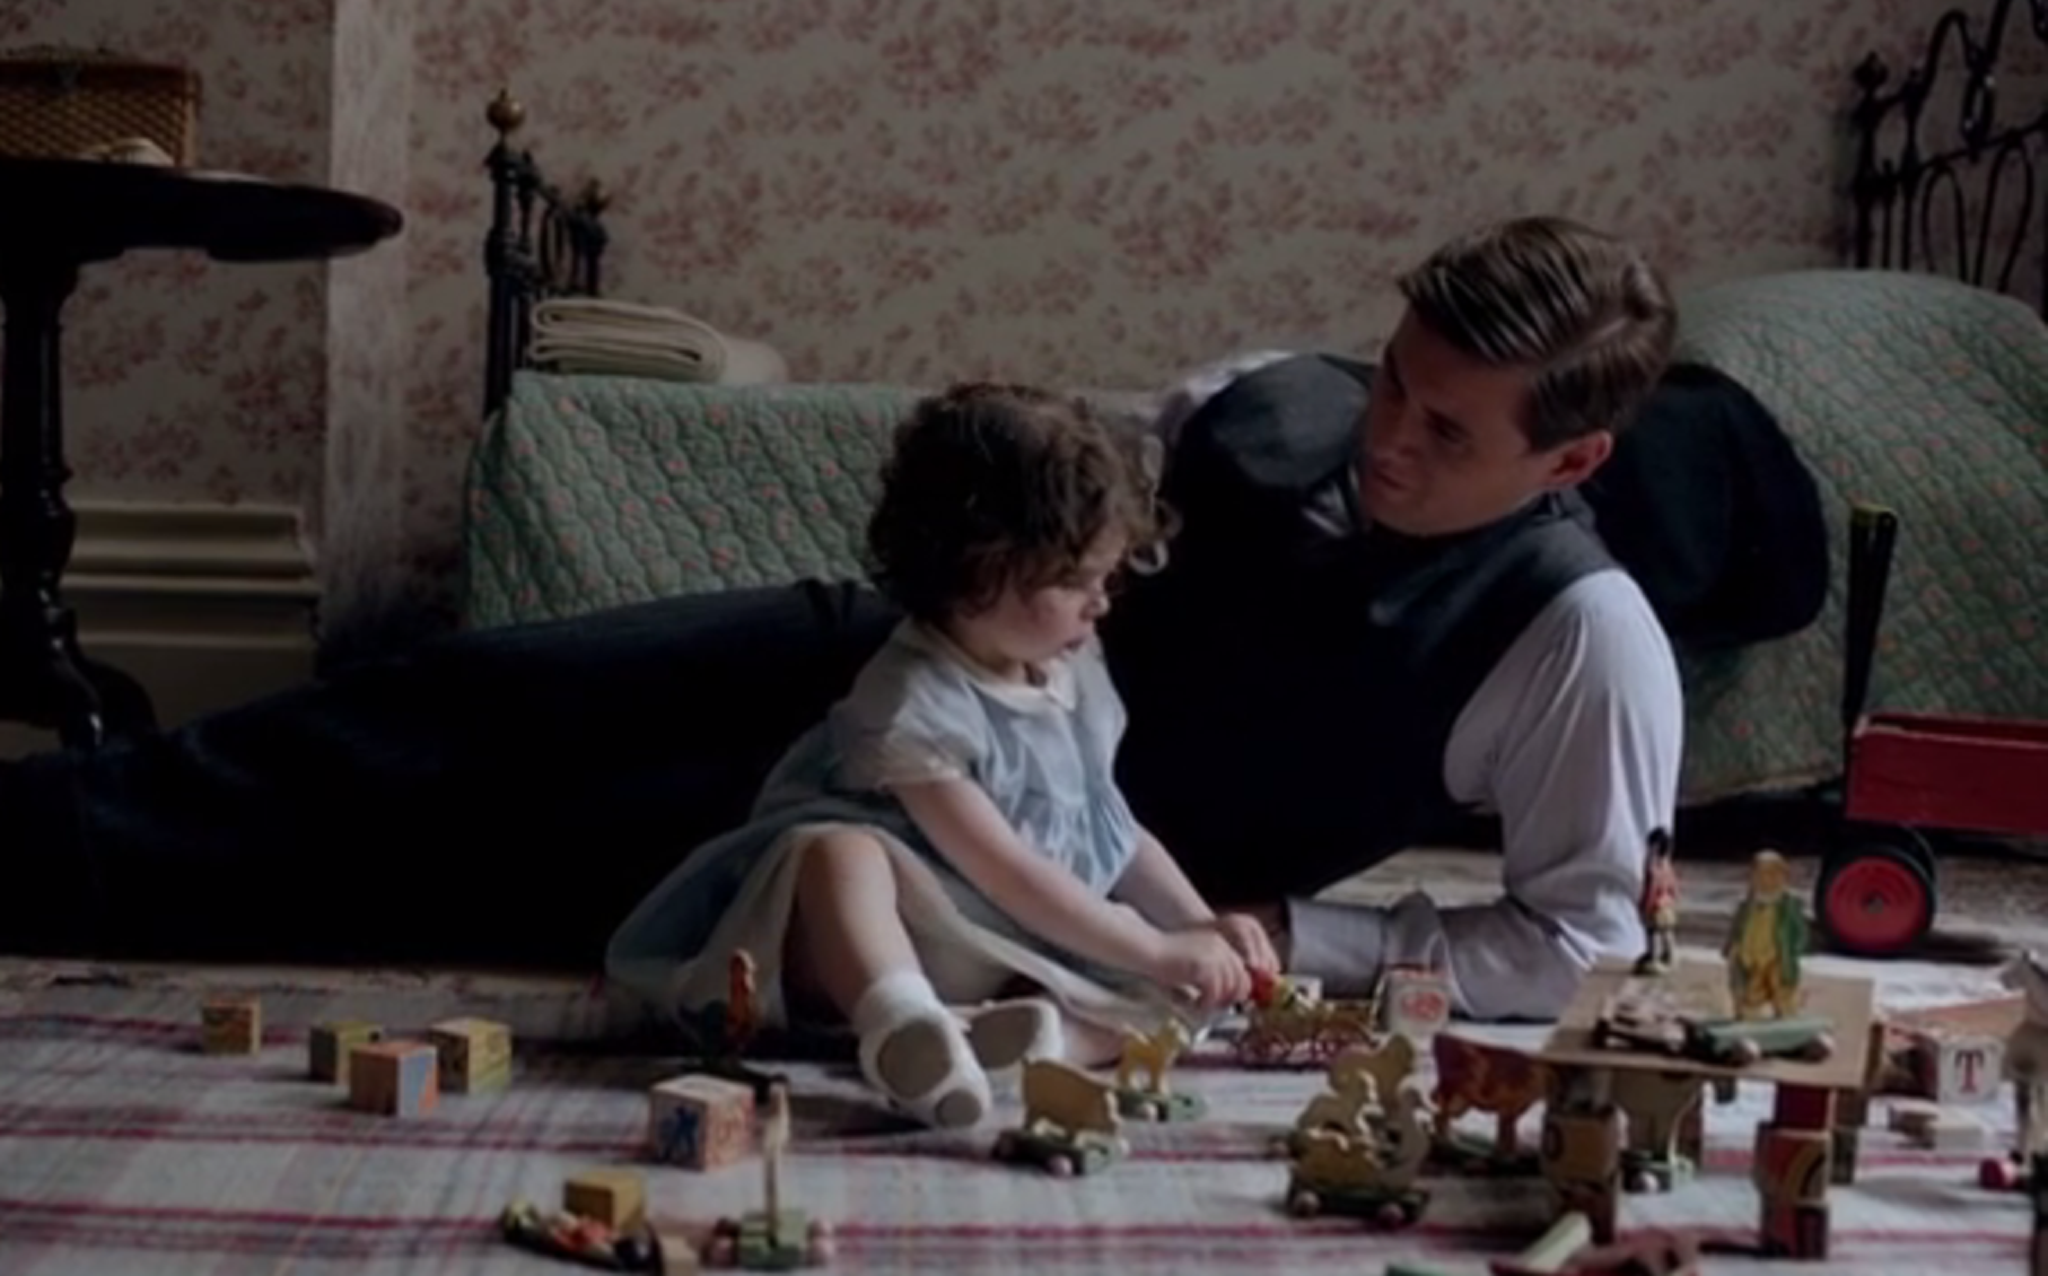 Tom talks to baby Sybbie in the Downton Abbey nursery